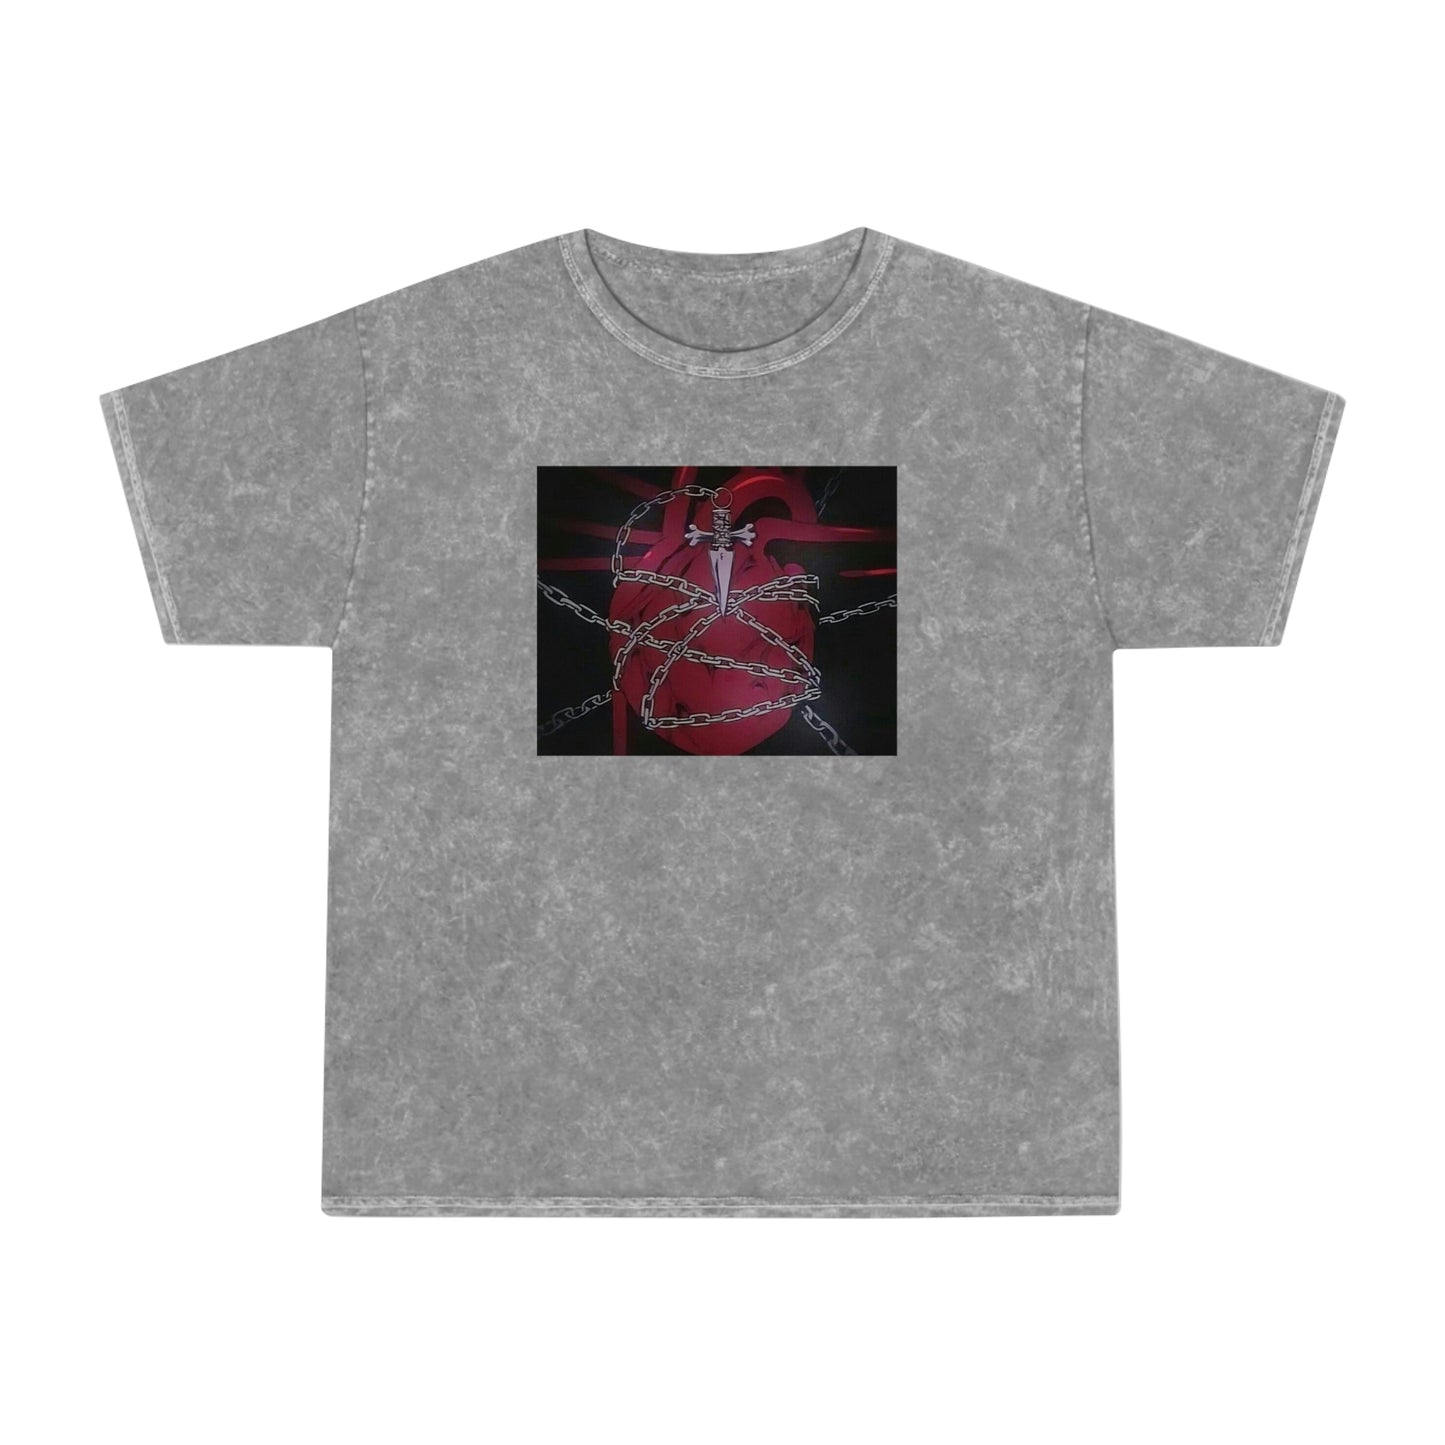 Kurapikas heart chains shirt Acid minderal wash vintage t-shirt